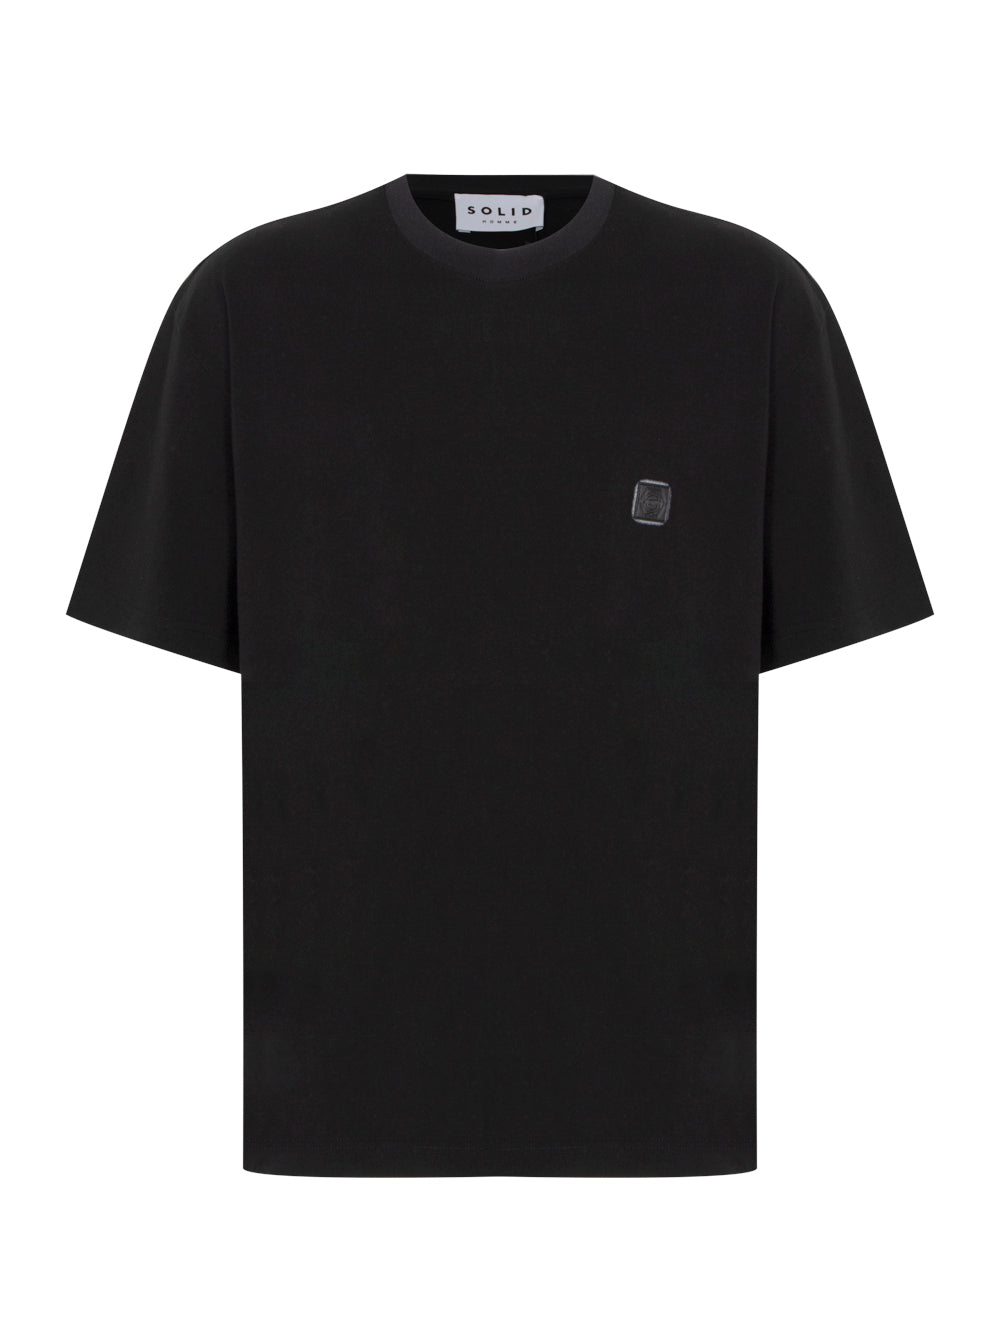 Blur T-Shirt (Black)